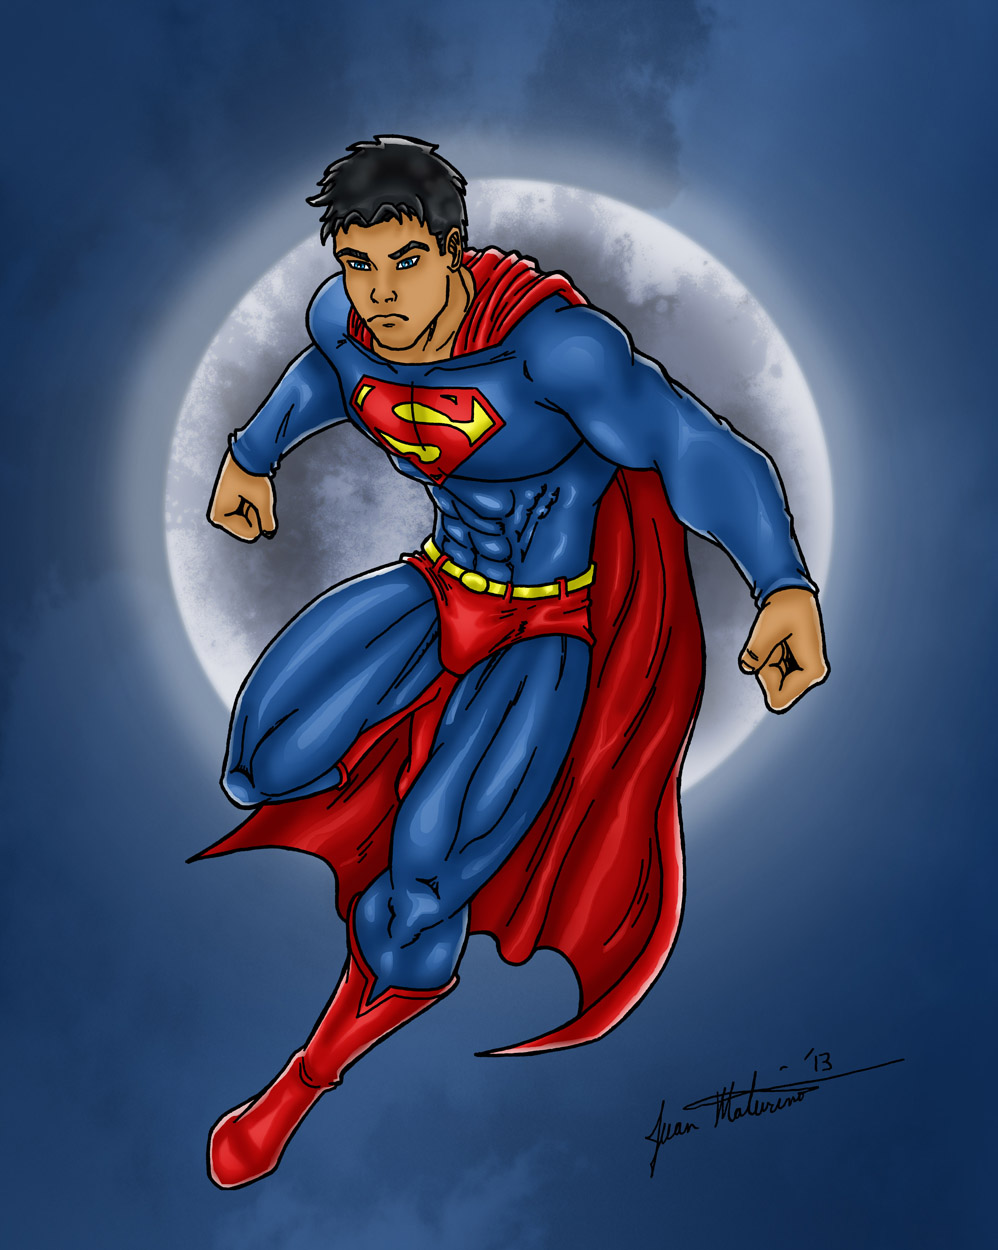 Wallpaper Gambar Kartun Superman Terbang Keren Iniwallpaperkami